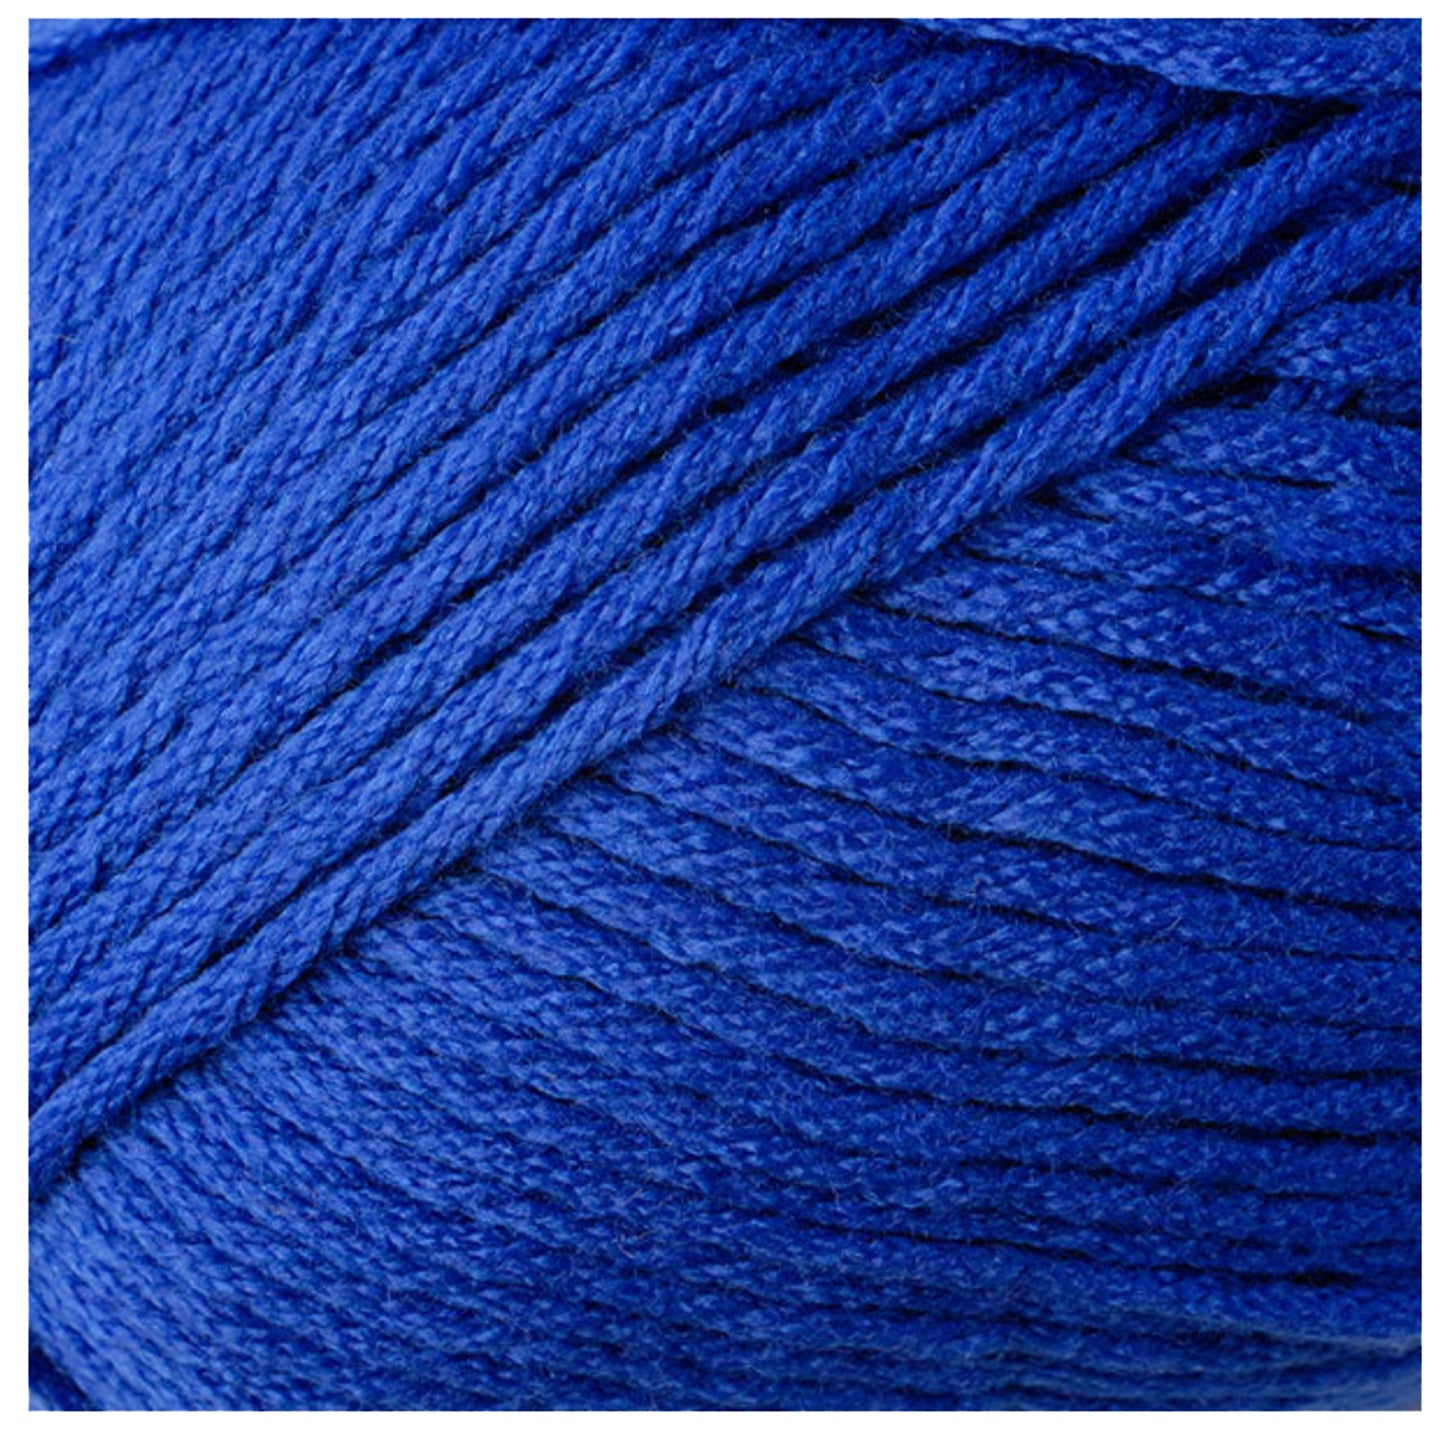 Colorful Crochet Skirt/Cowl - XS/S/M - All Blues Crochet Kit Alternative View #5